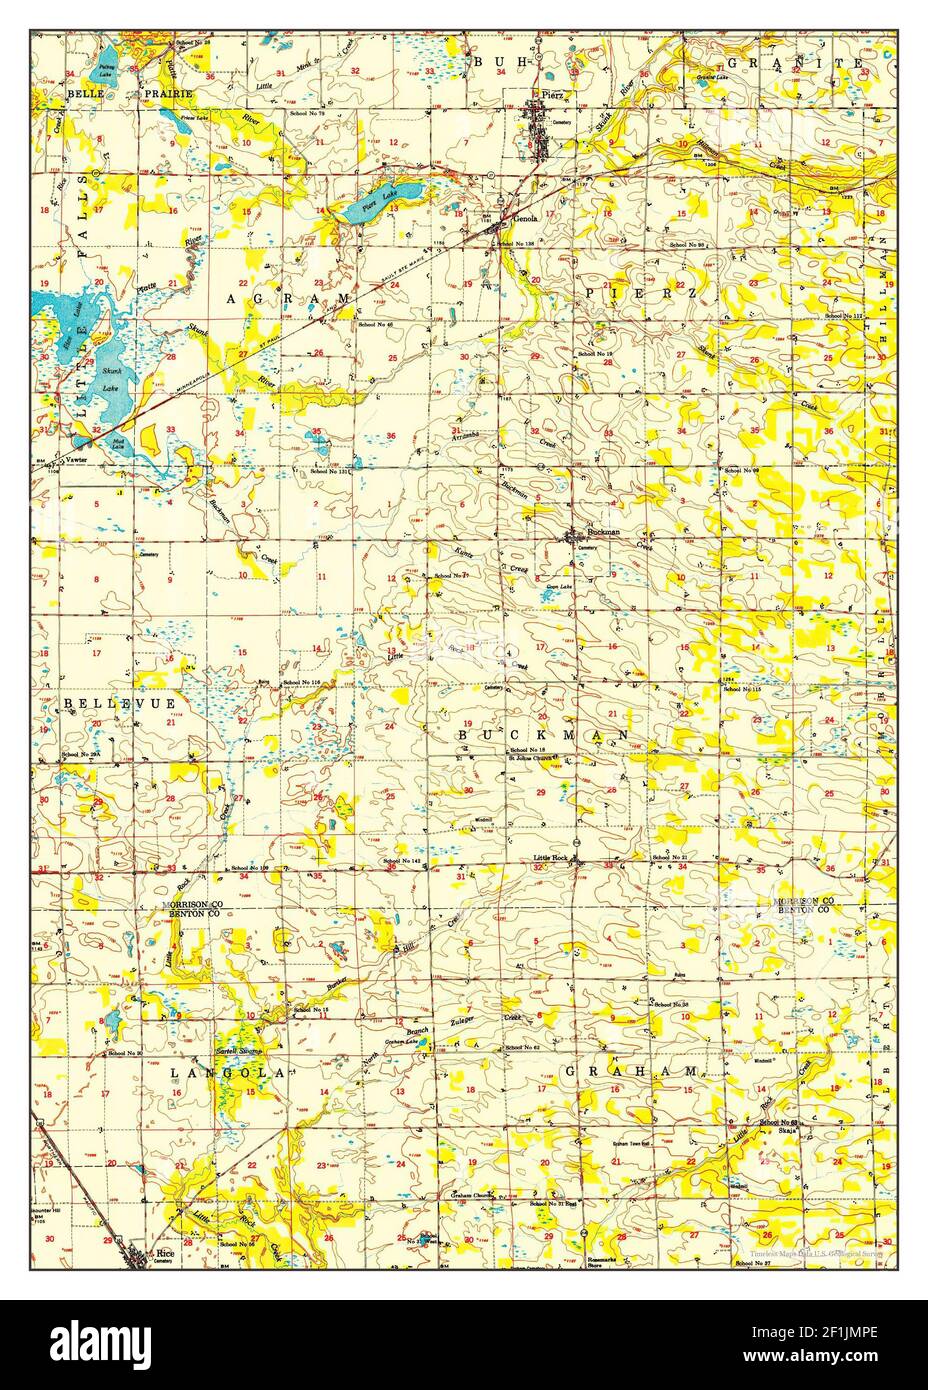 Pierz, Minnesota, map 1950, 1:62500, United States of America by Timeless Maps, data U.S. Geological Survey Stock Photo